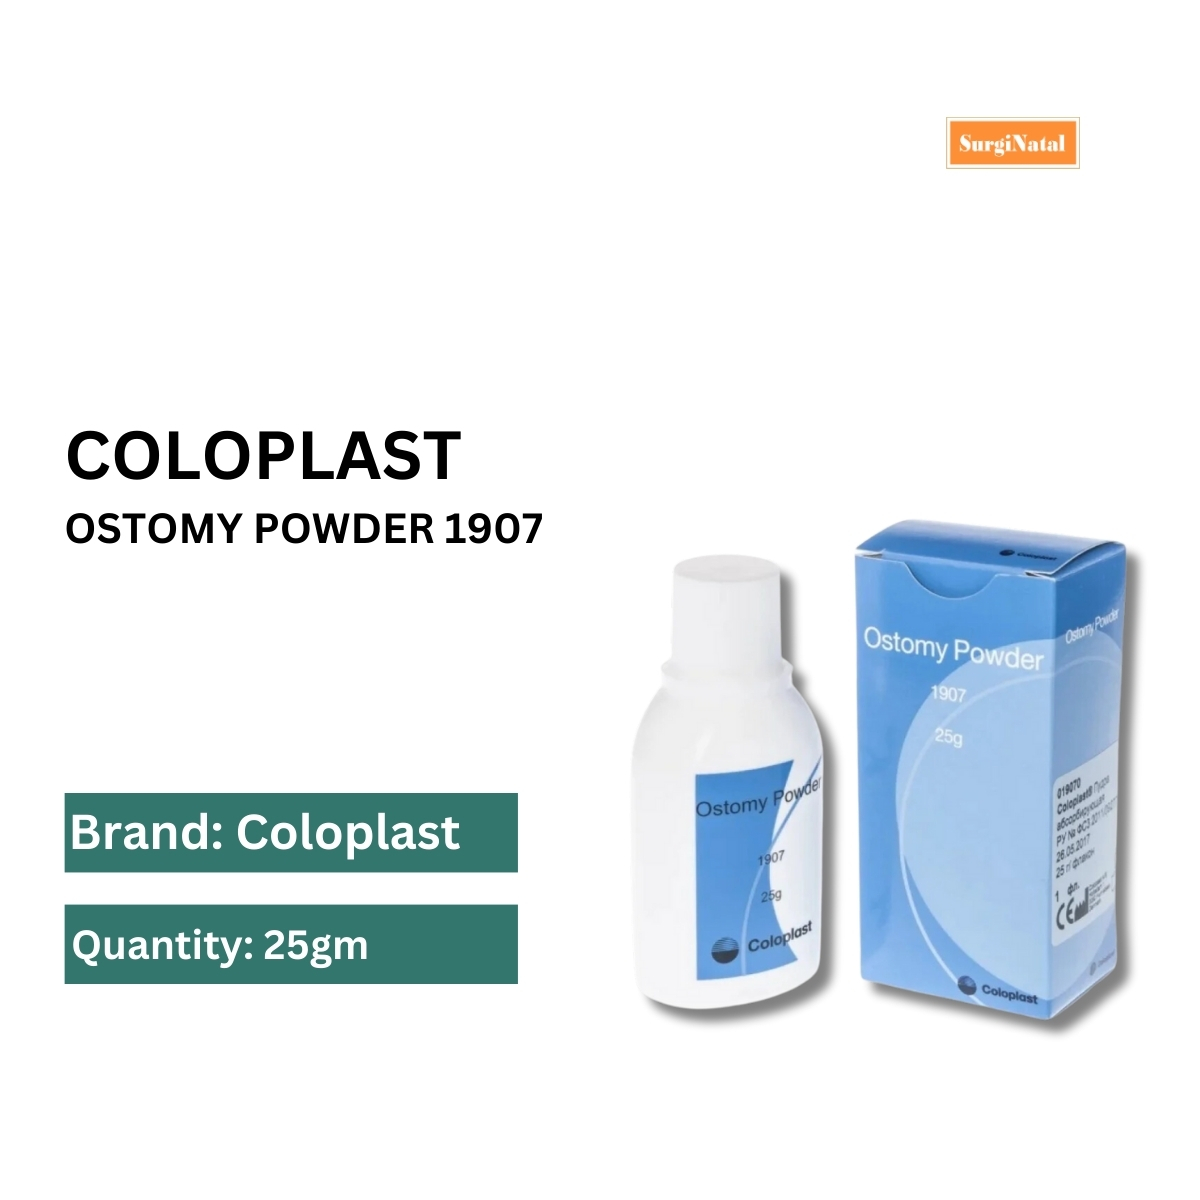  1907 coloplast ostomy powder